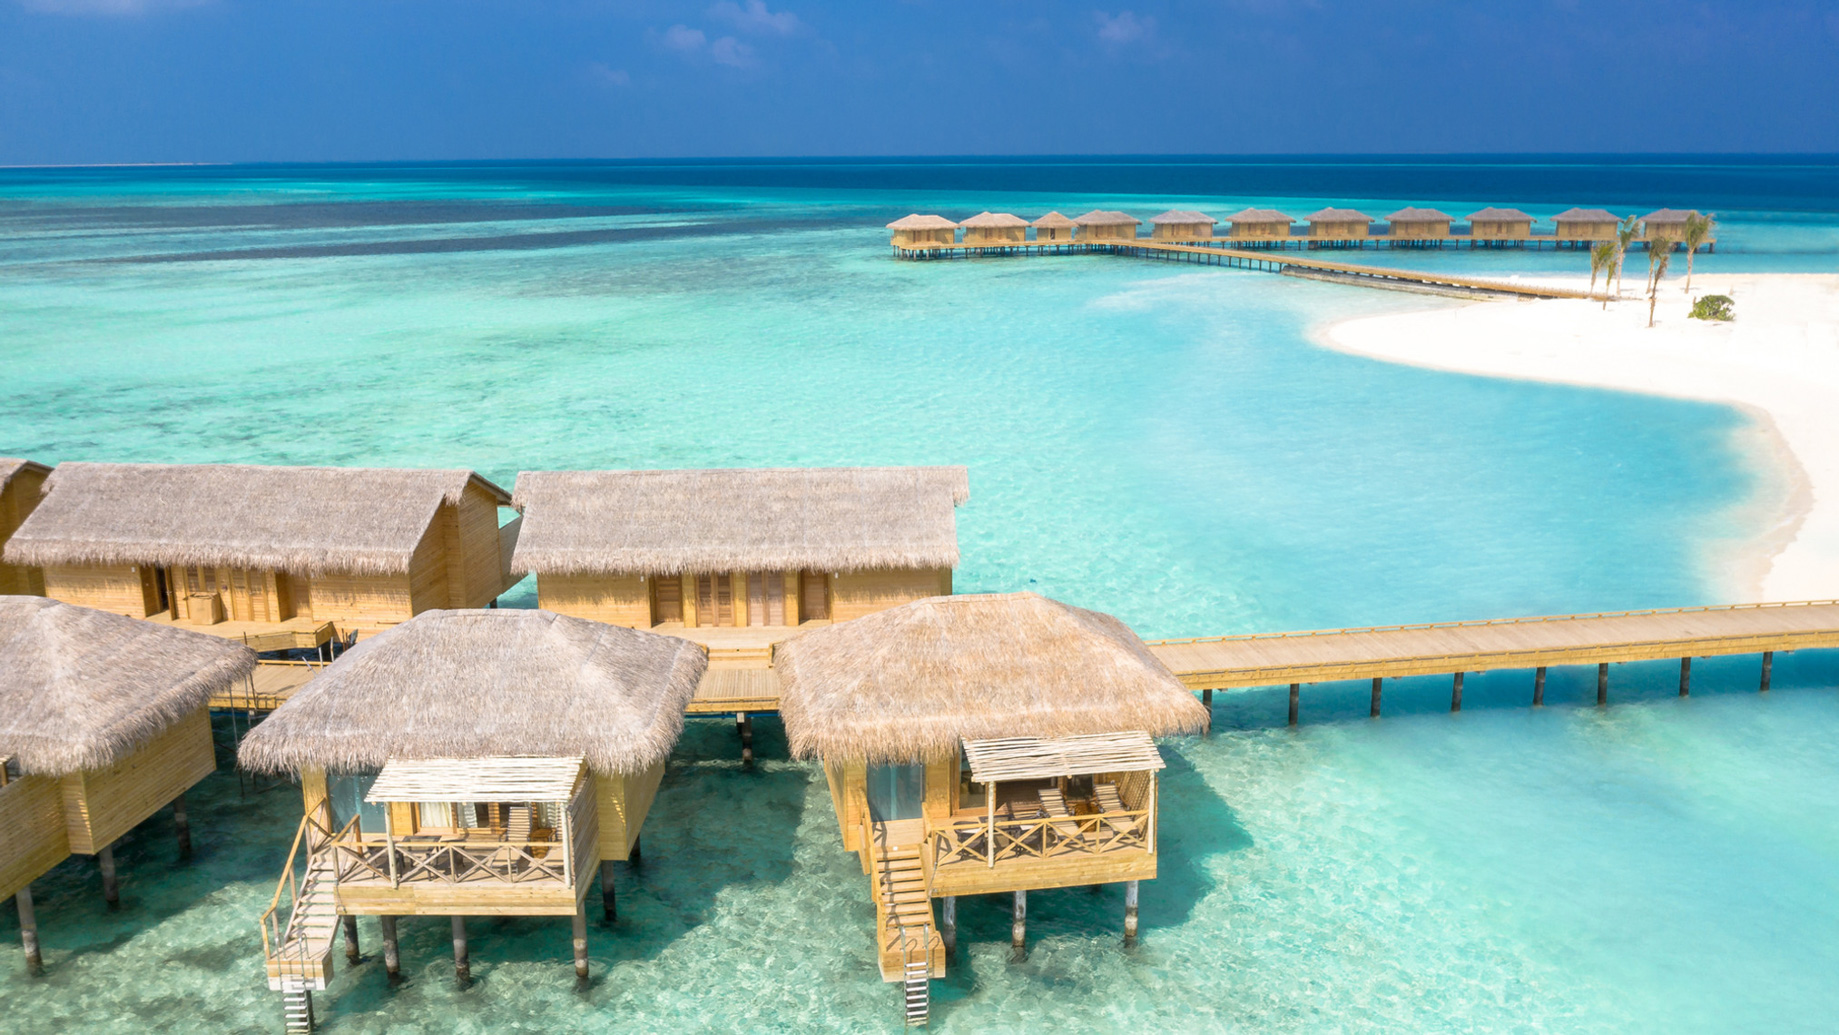 You & Me Maldives Resort - Uthurumaafaru, Raa Atoll, Maldives - Dolphin Overwater Villa Aerial View